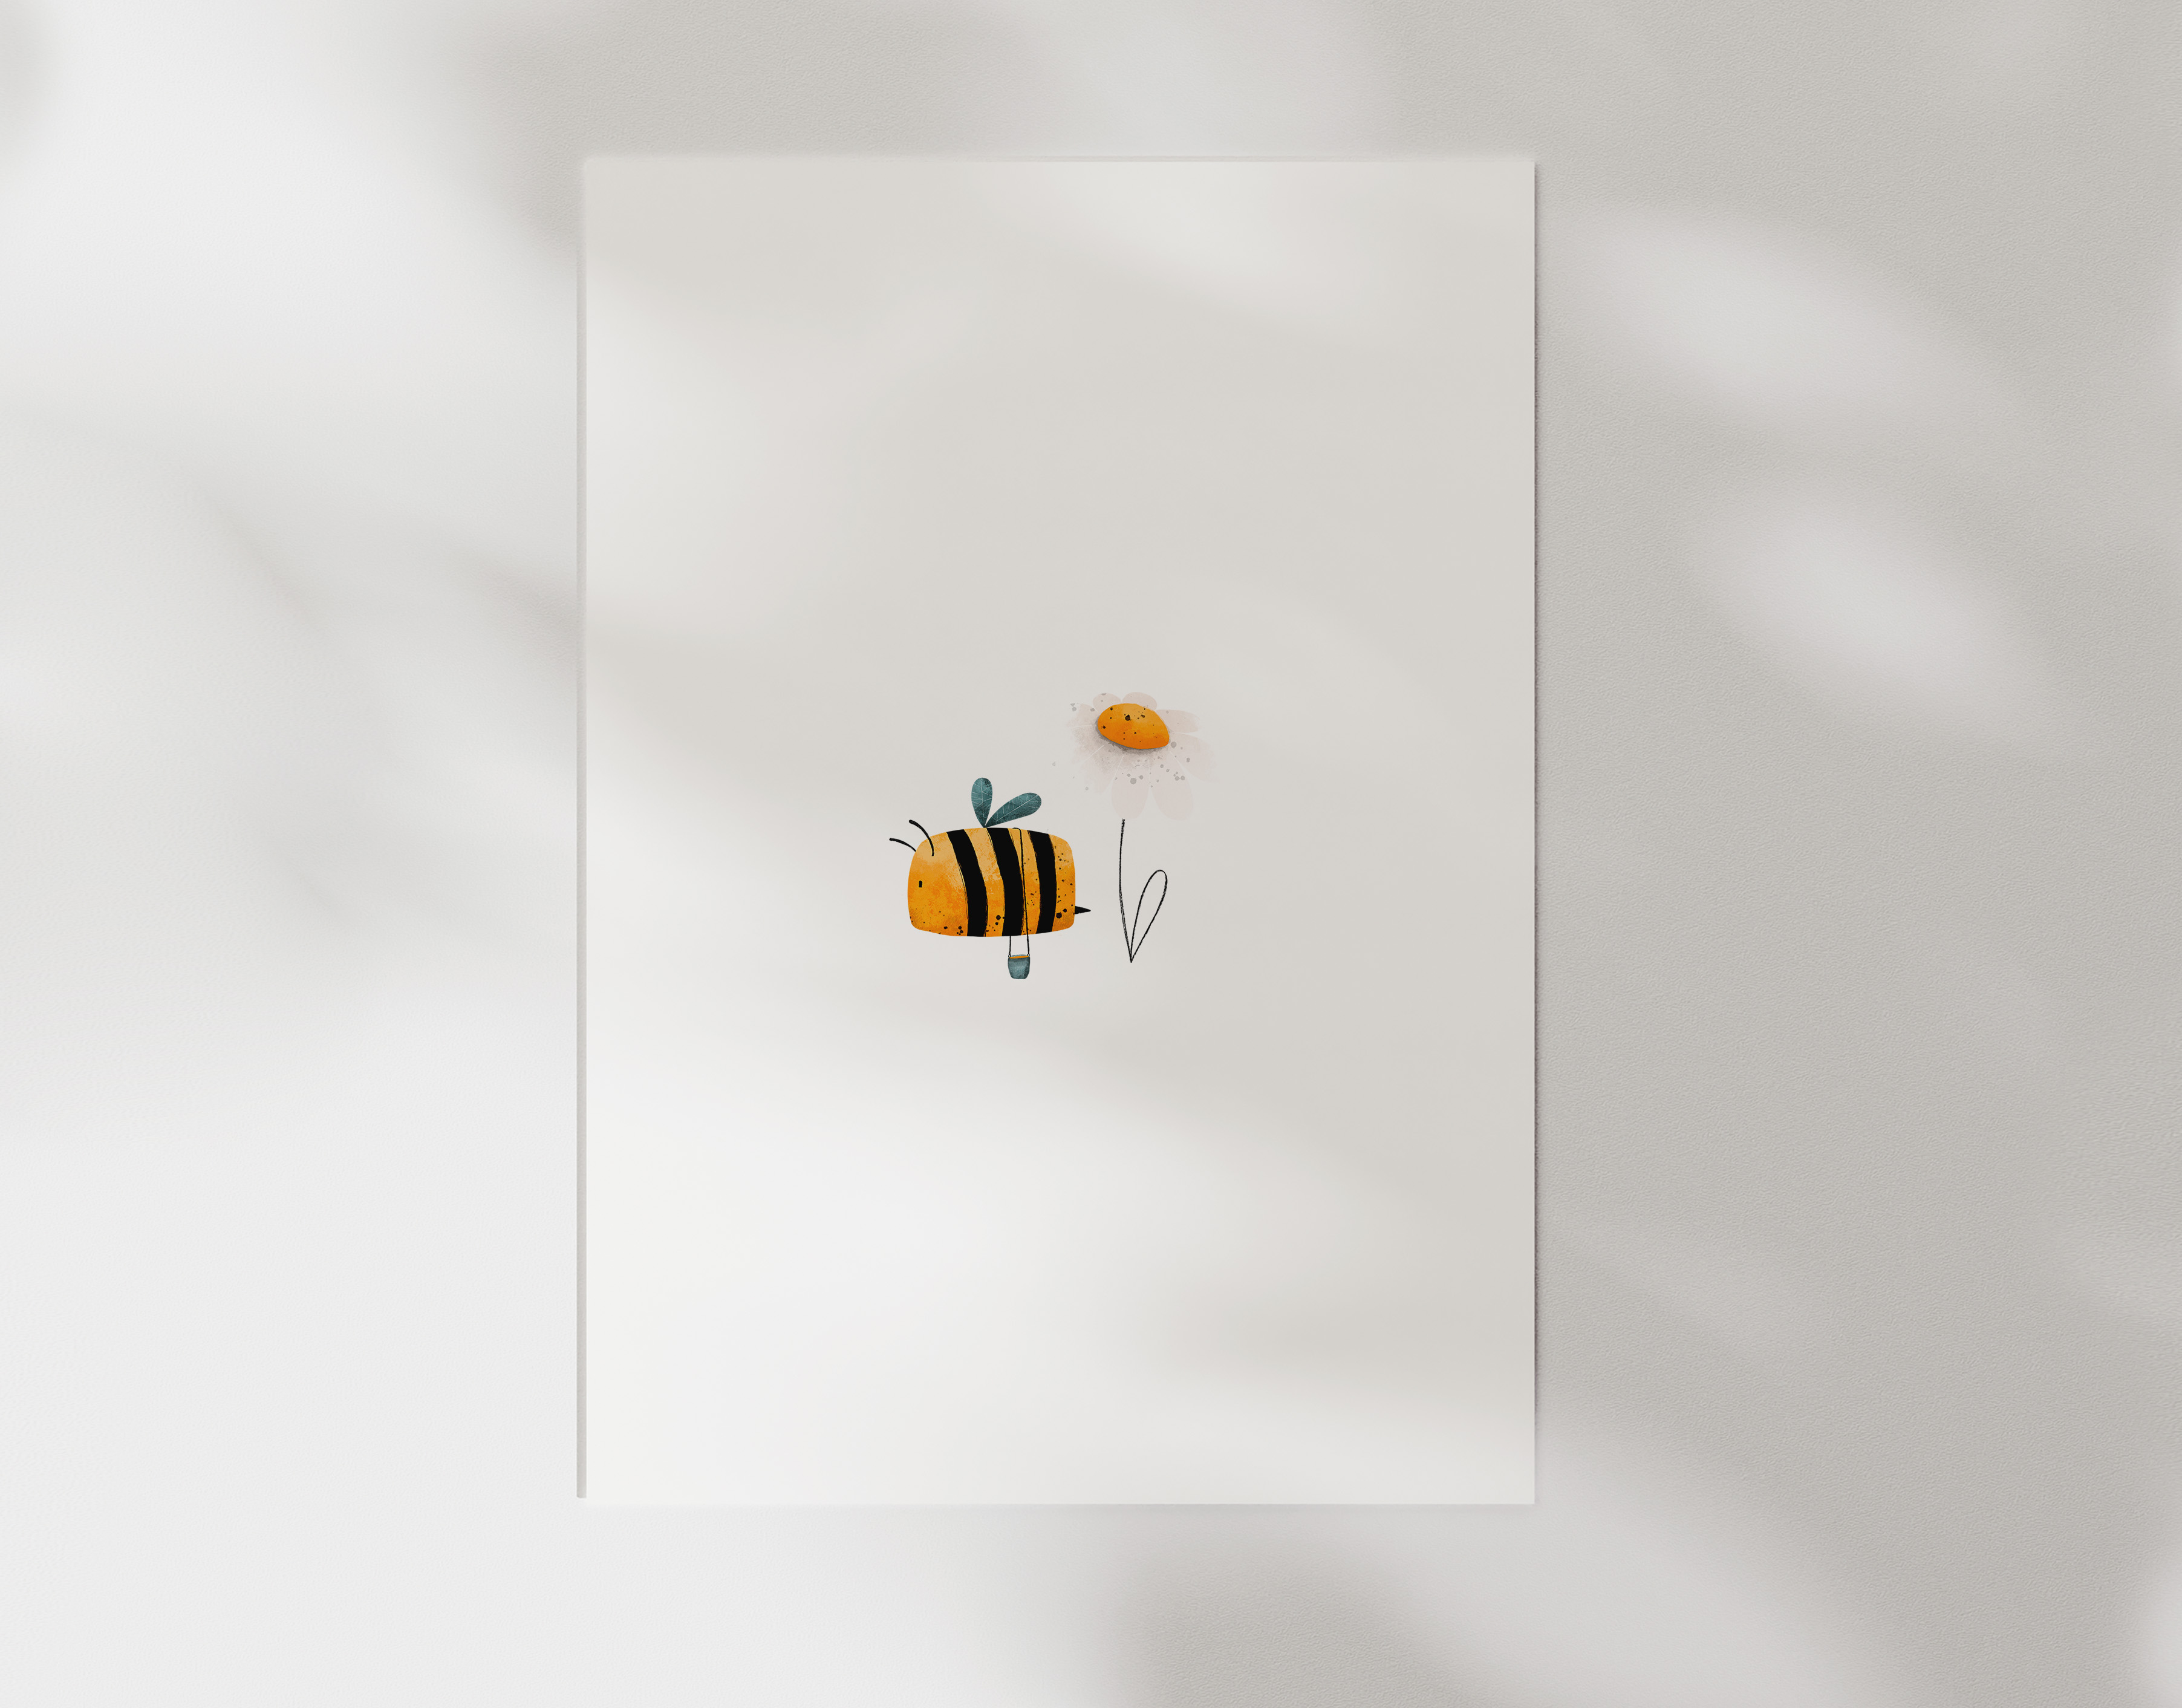 Bügelbild Pollenflug Biene Blume Kollektion Fairy Story ca. 9,5x8 cm BxH